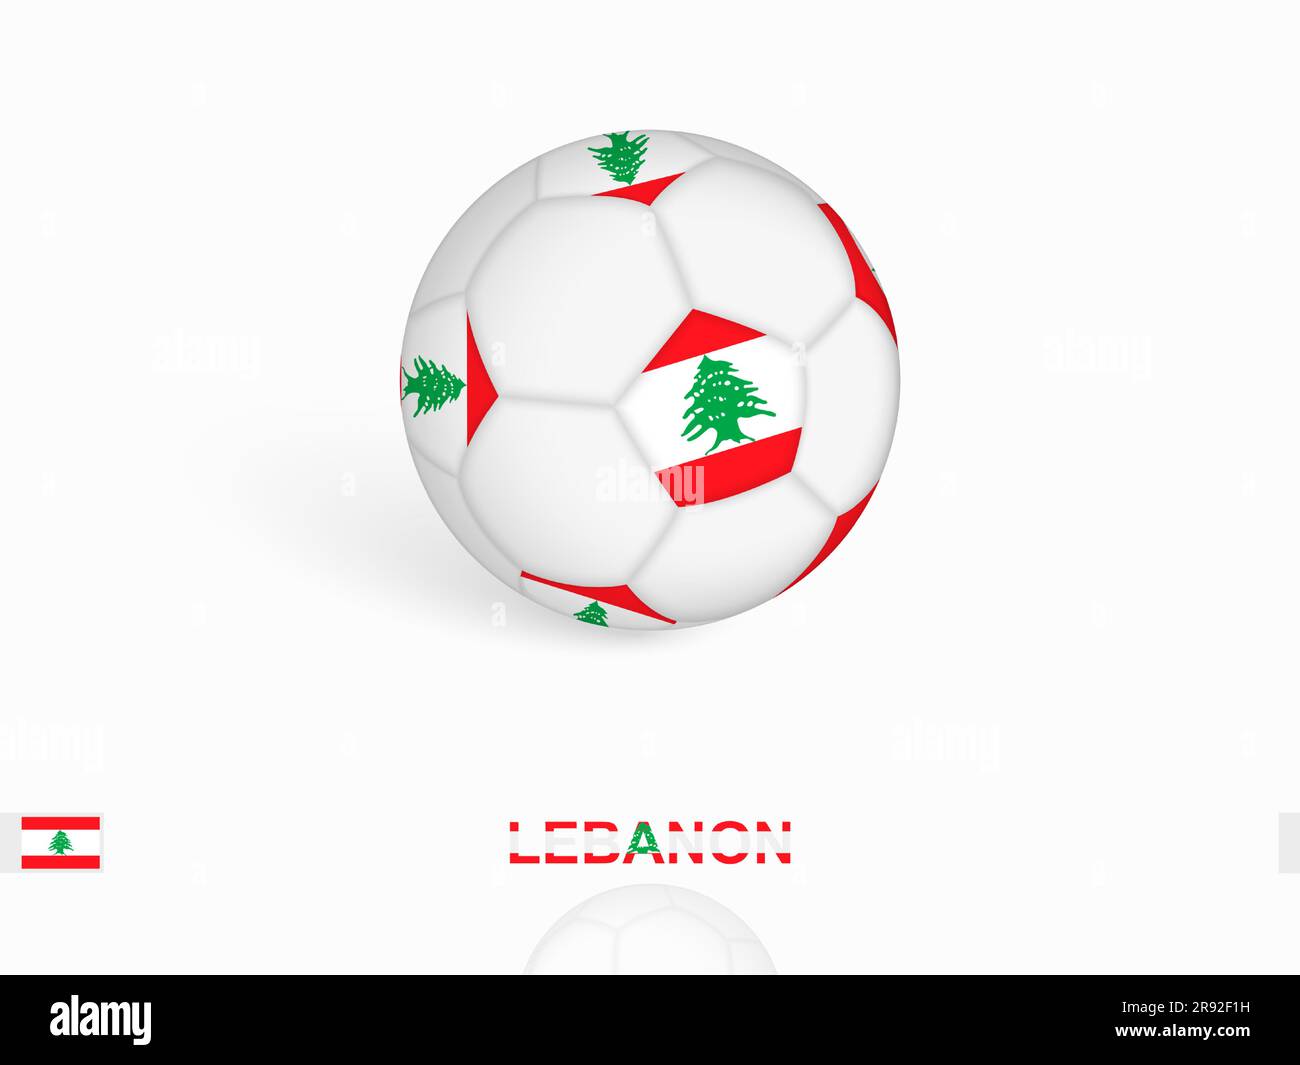 Ballon de football avec drapeau libanais, équipement de sport de football. Illustration vectorielle. Illustration de Vecteur